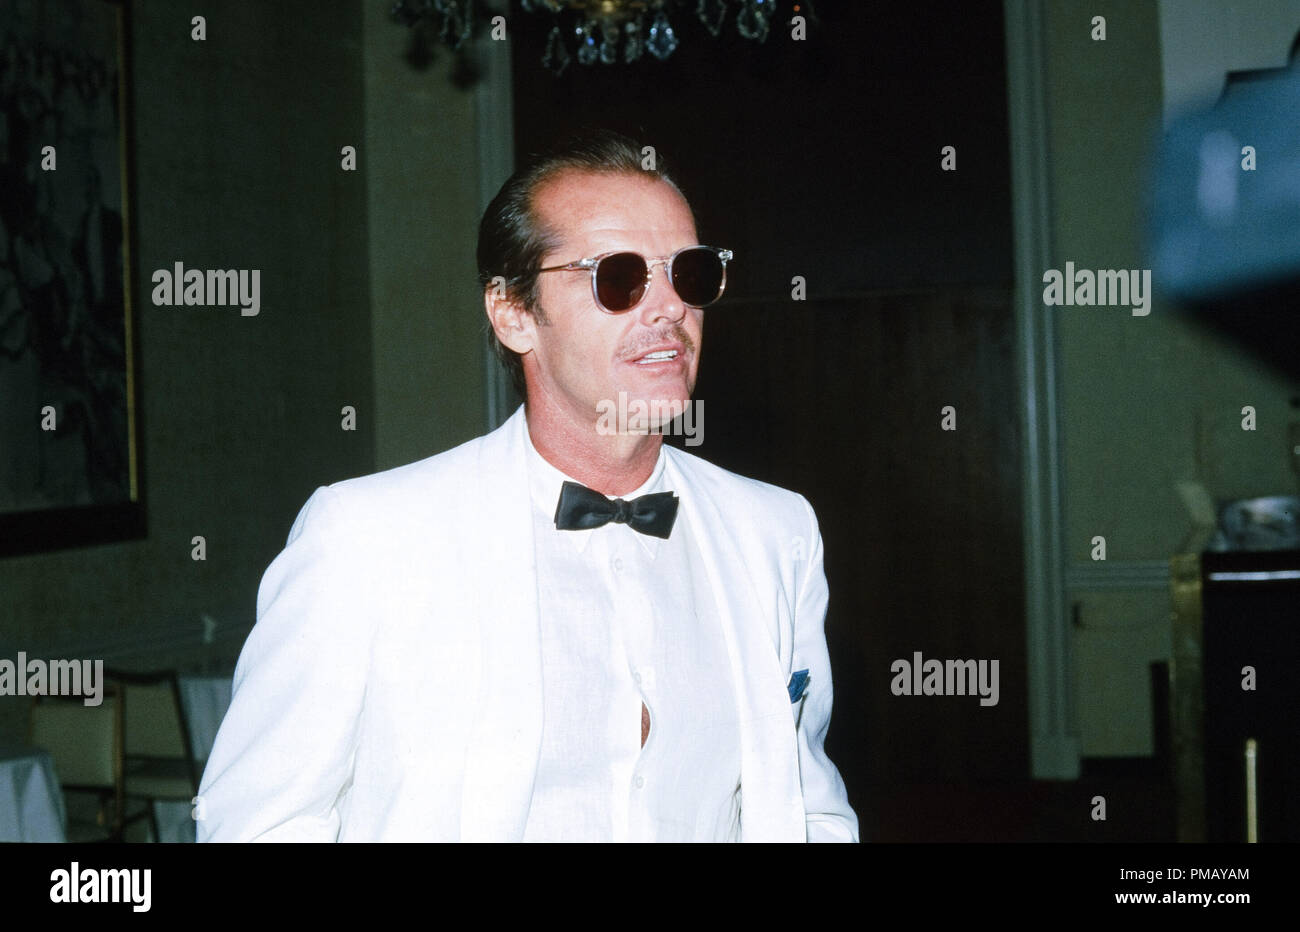 Jack Nicholson circa 1977 File Reference # 32557 115THA Stock Photo